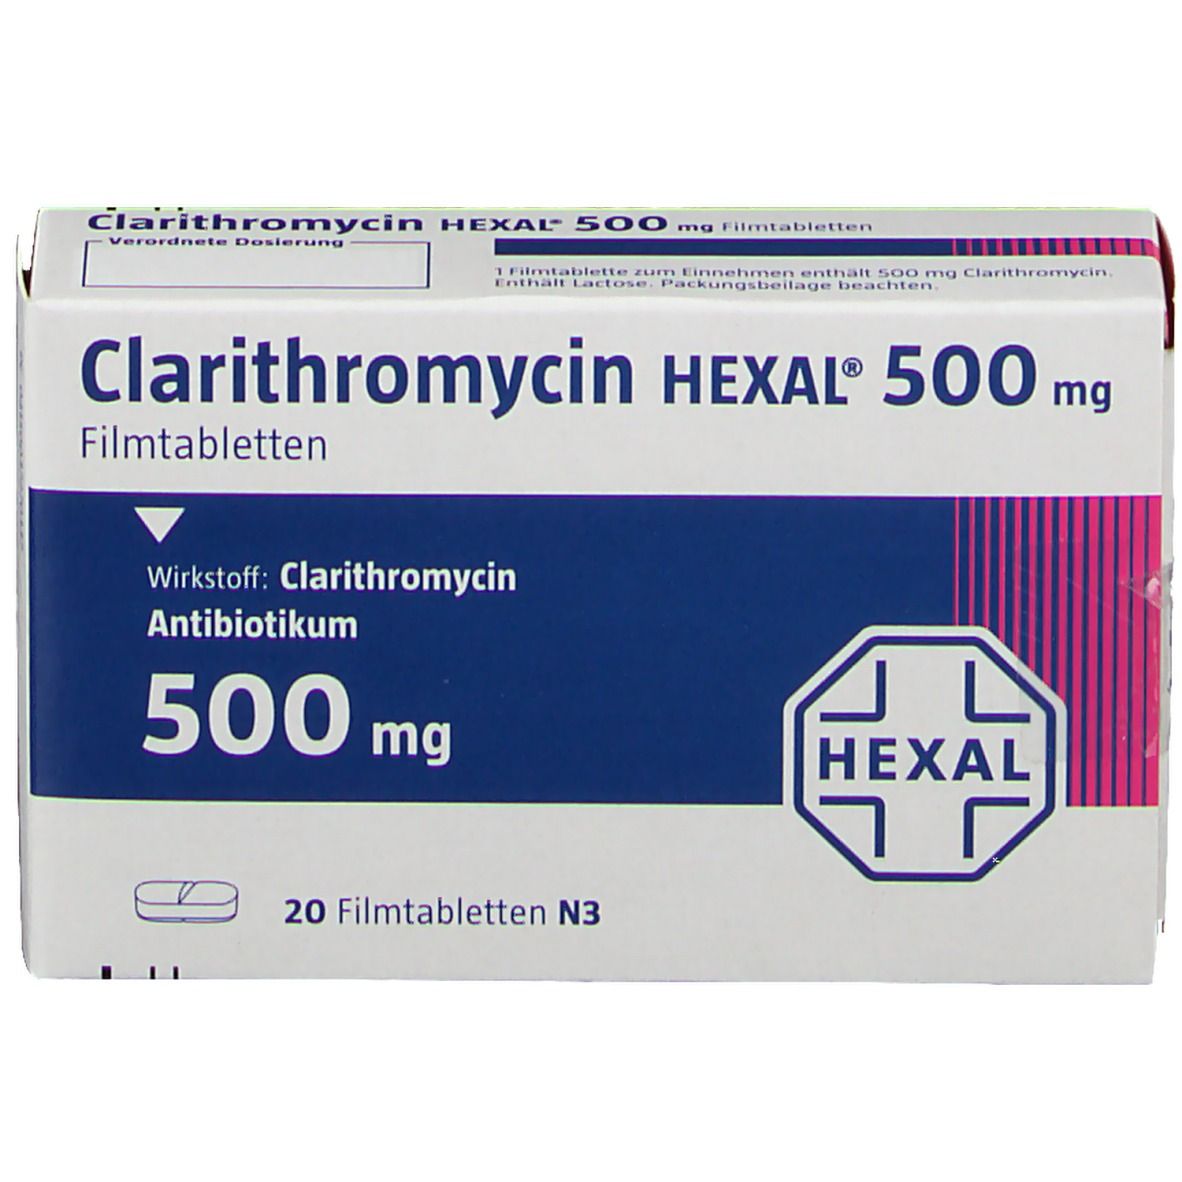 Clarithromycin HEXAL® 500 mg